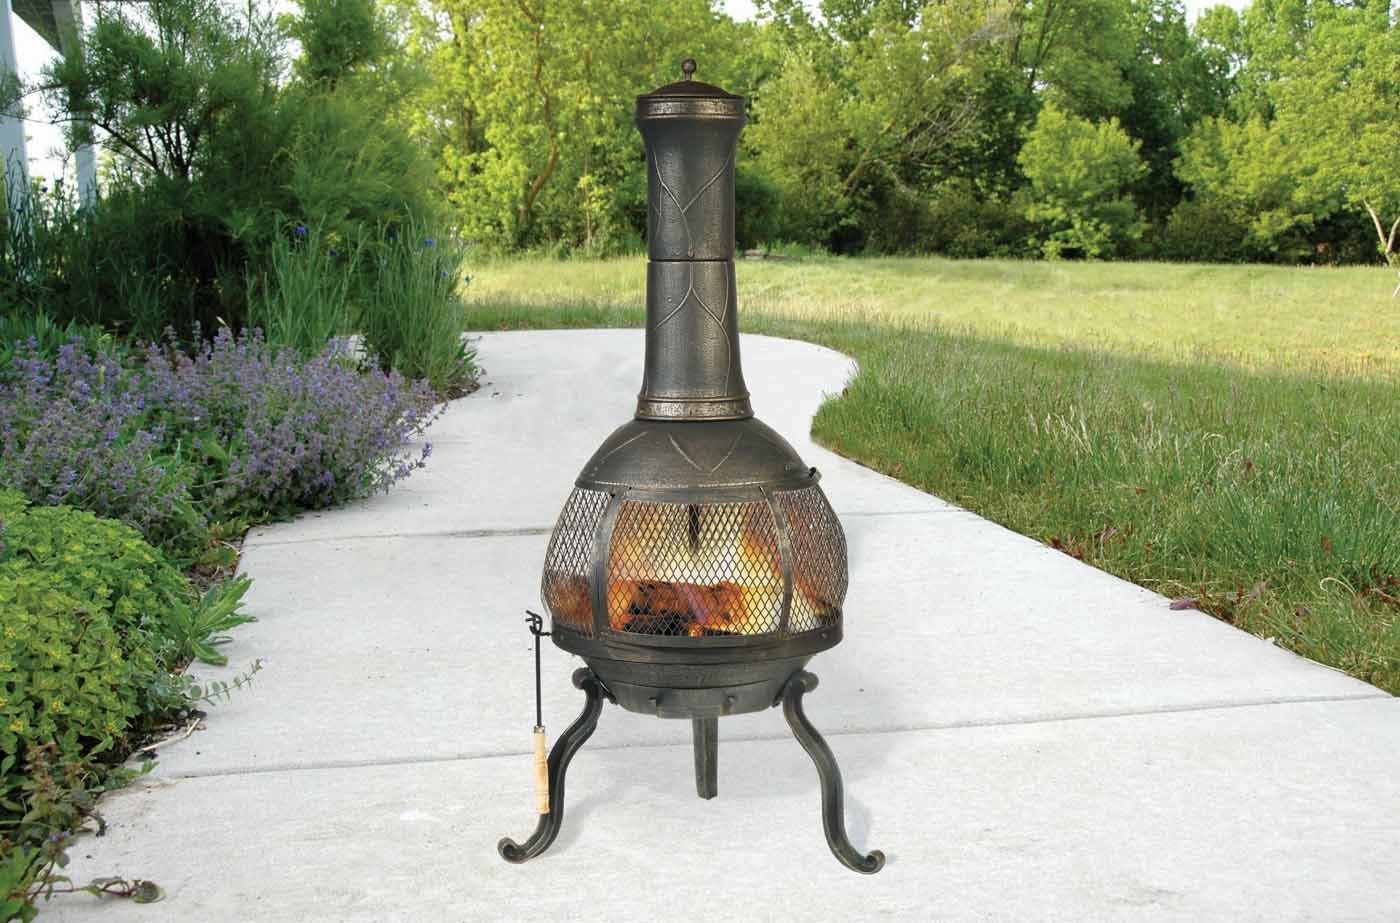 Chiminea Outdoor Fireplace Fire Pit Backyard Wood Burning Heater w/ Rain Cover 